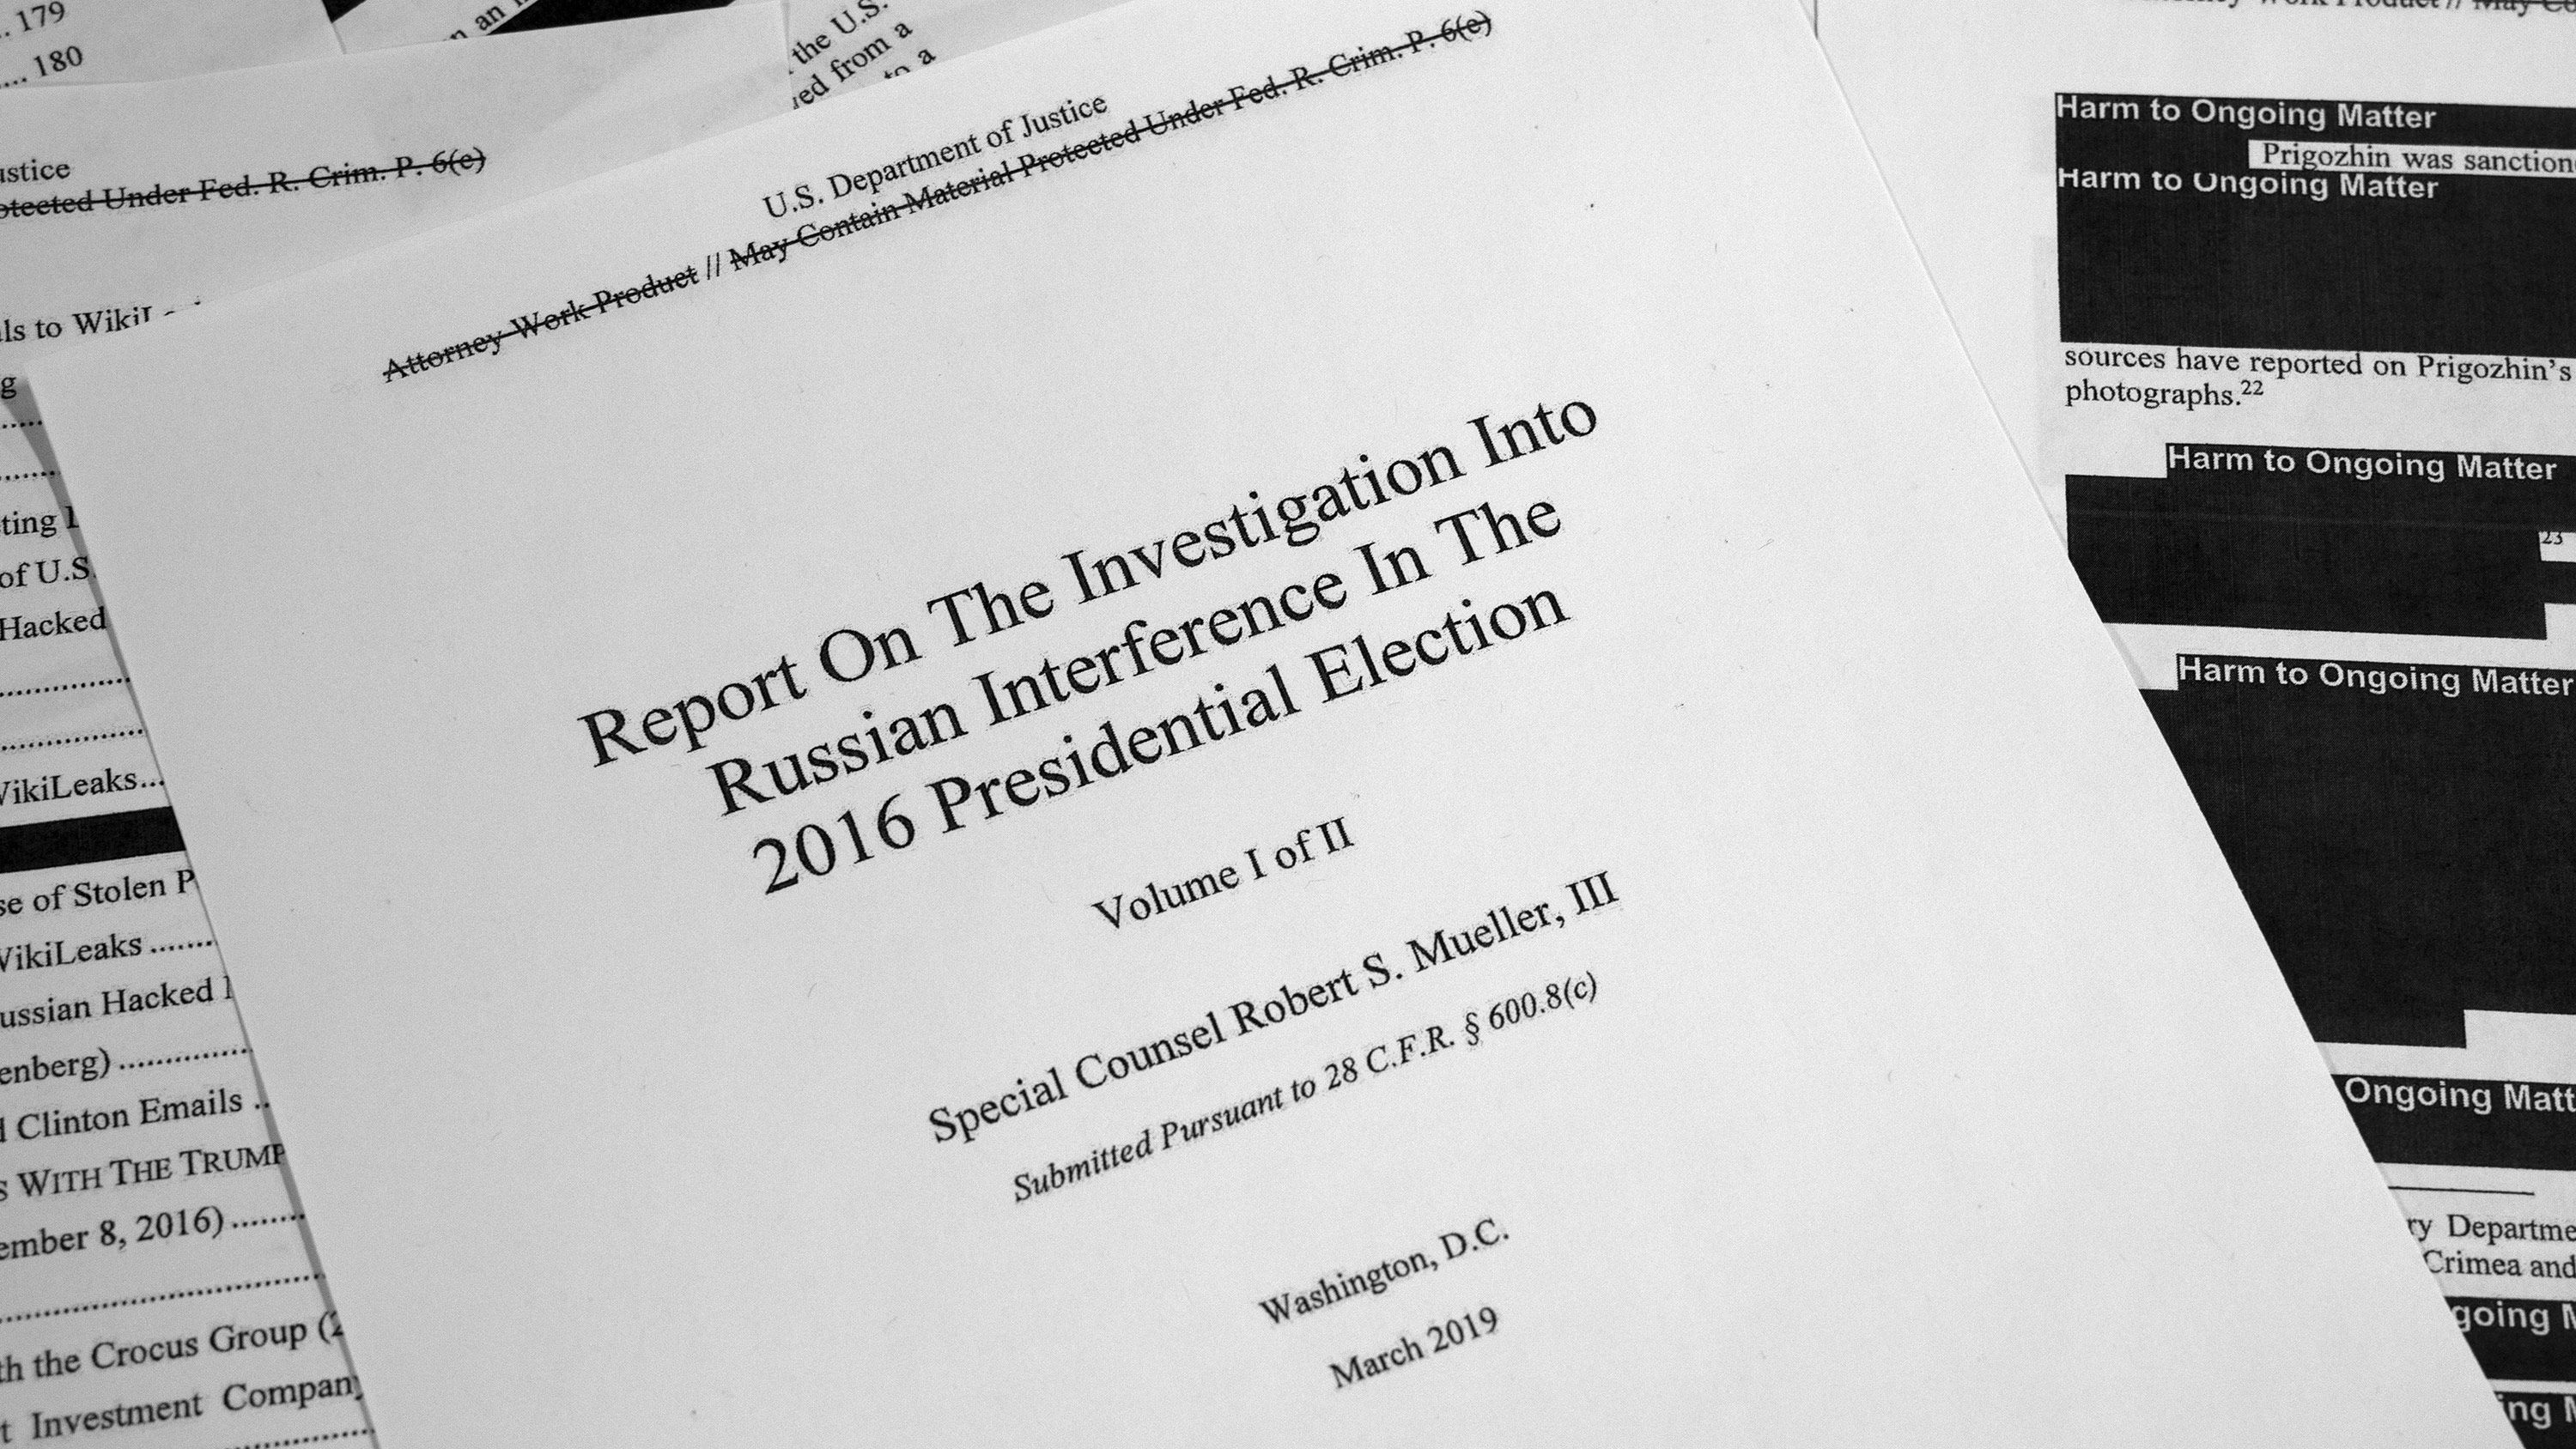 mueller report volume 2 pdf download